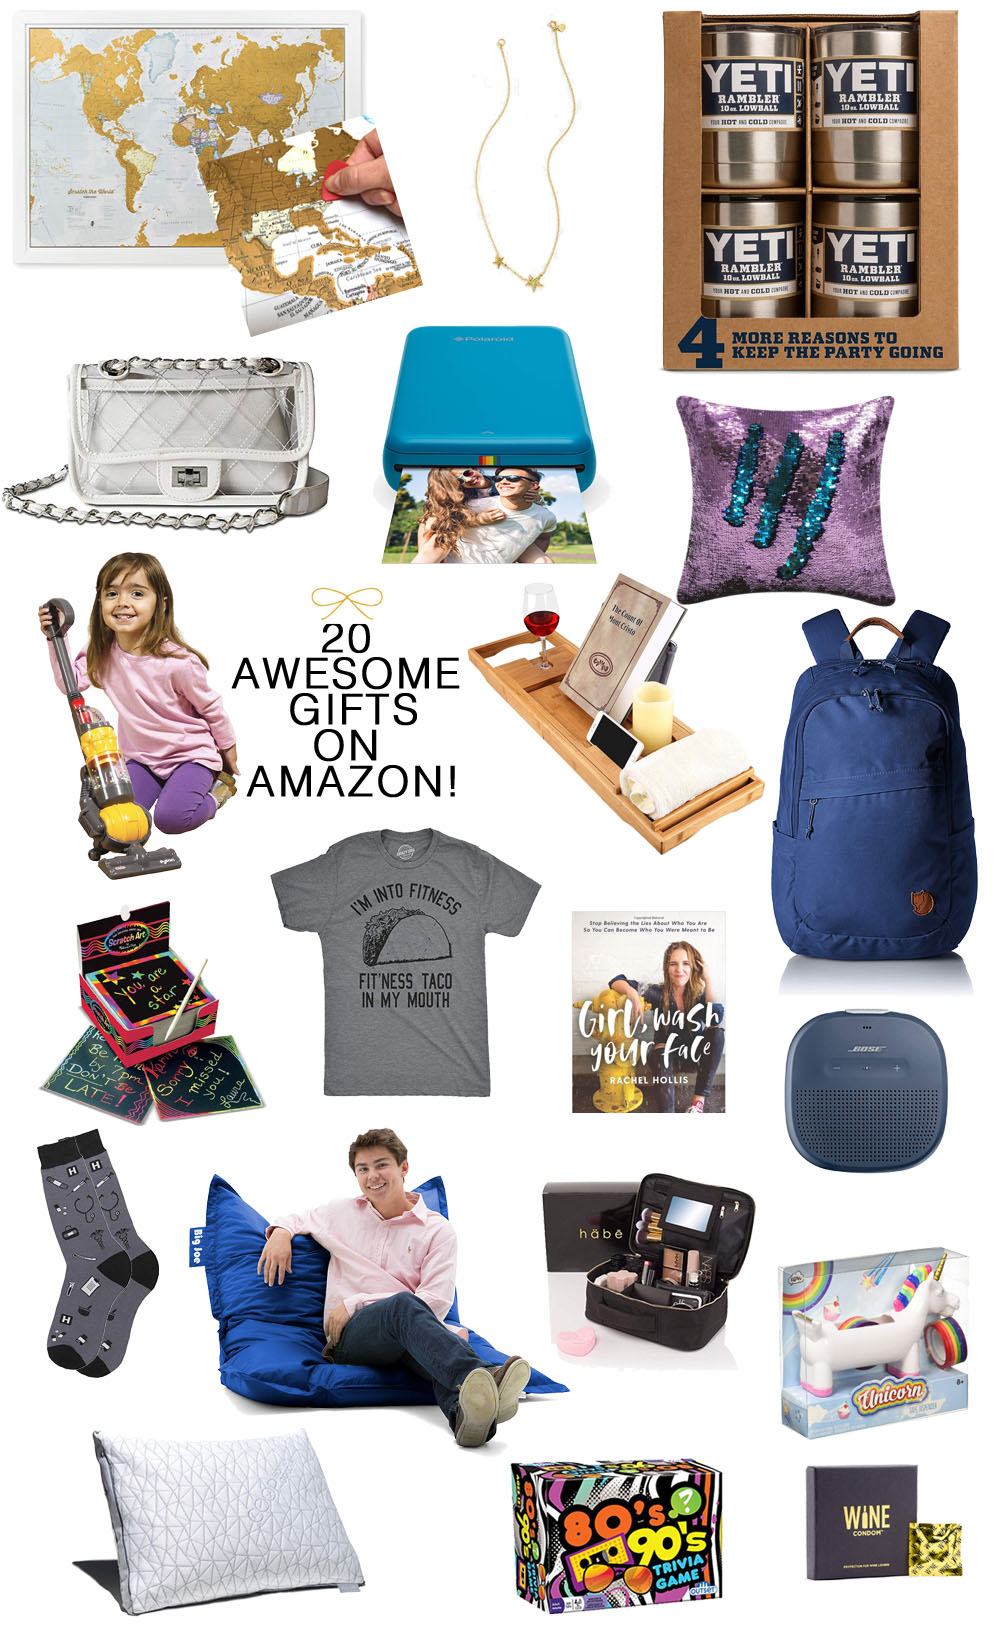 Amazon Gift Guide: 20 Awesome GIft Ideas Available on Amazon #giftideas #amazon #holiday